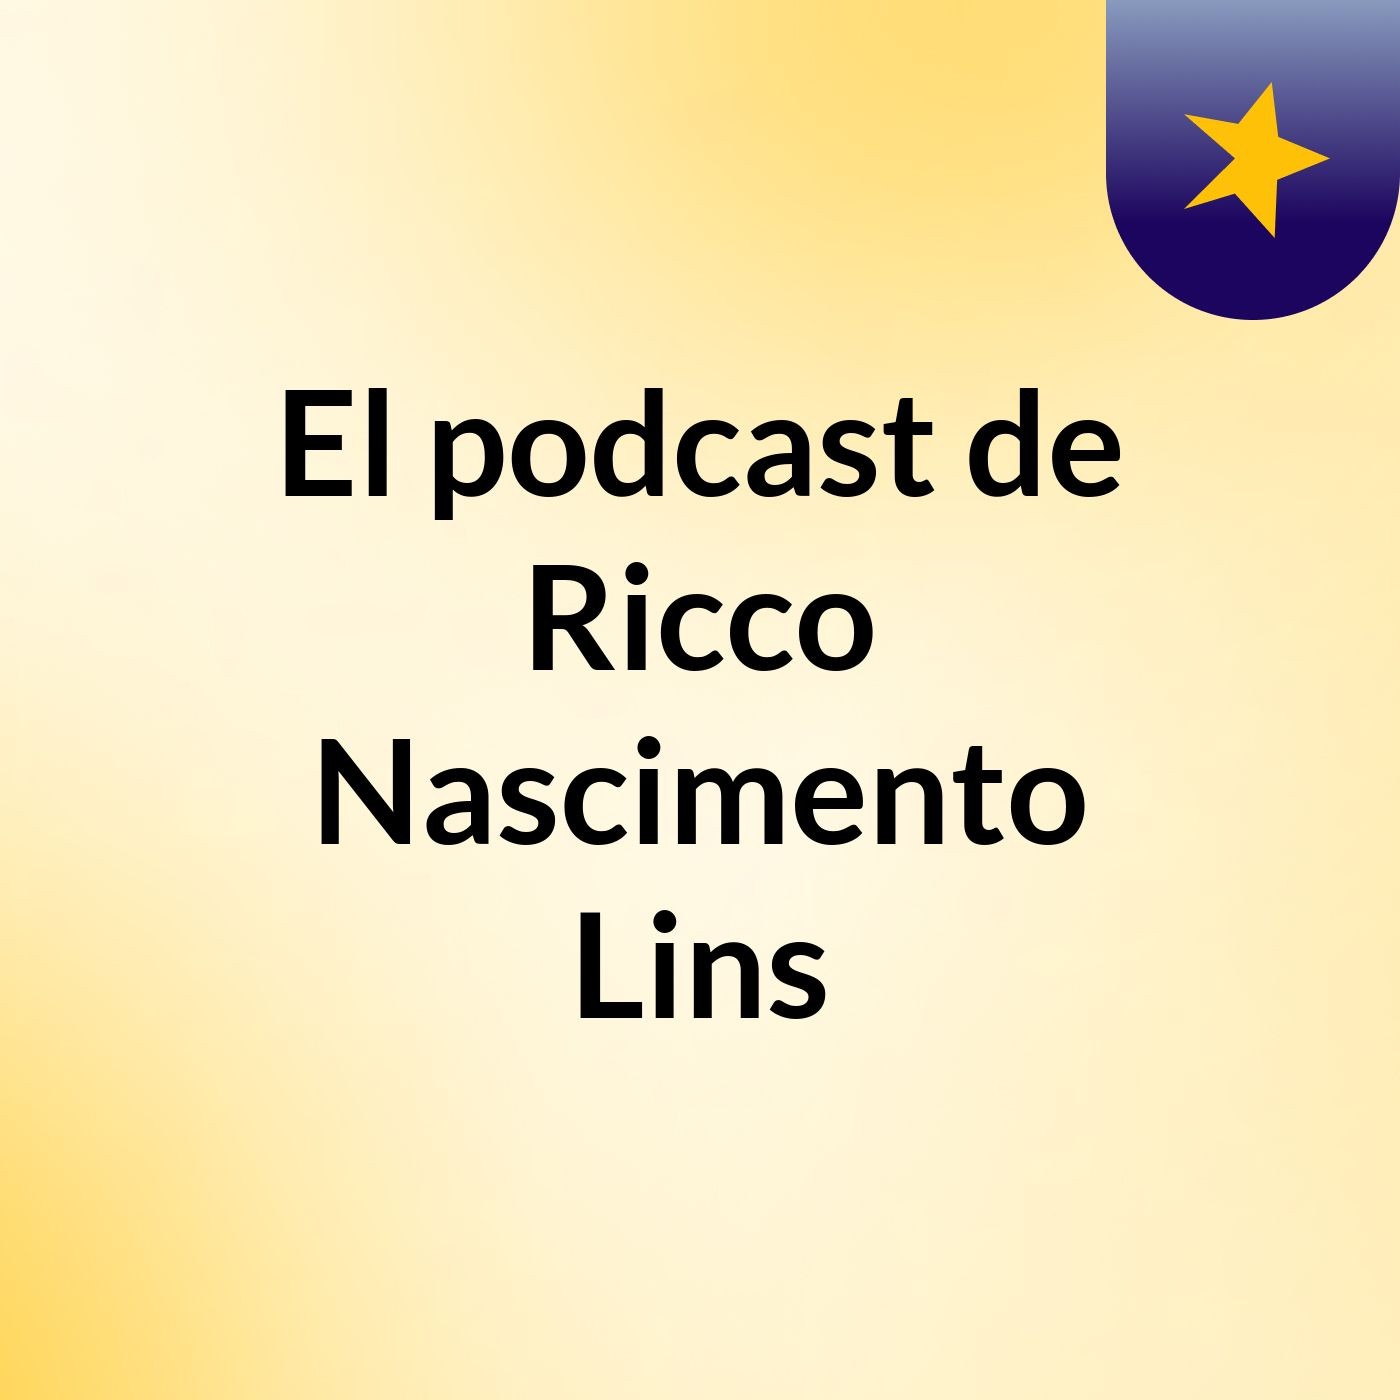 El podcast de Ricco Nascimento Lins